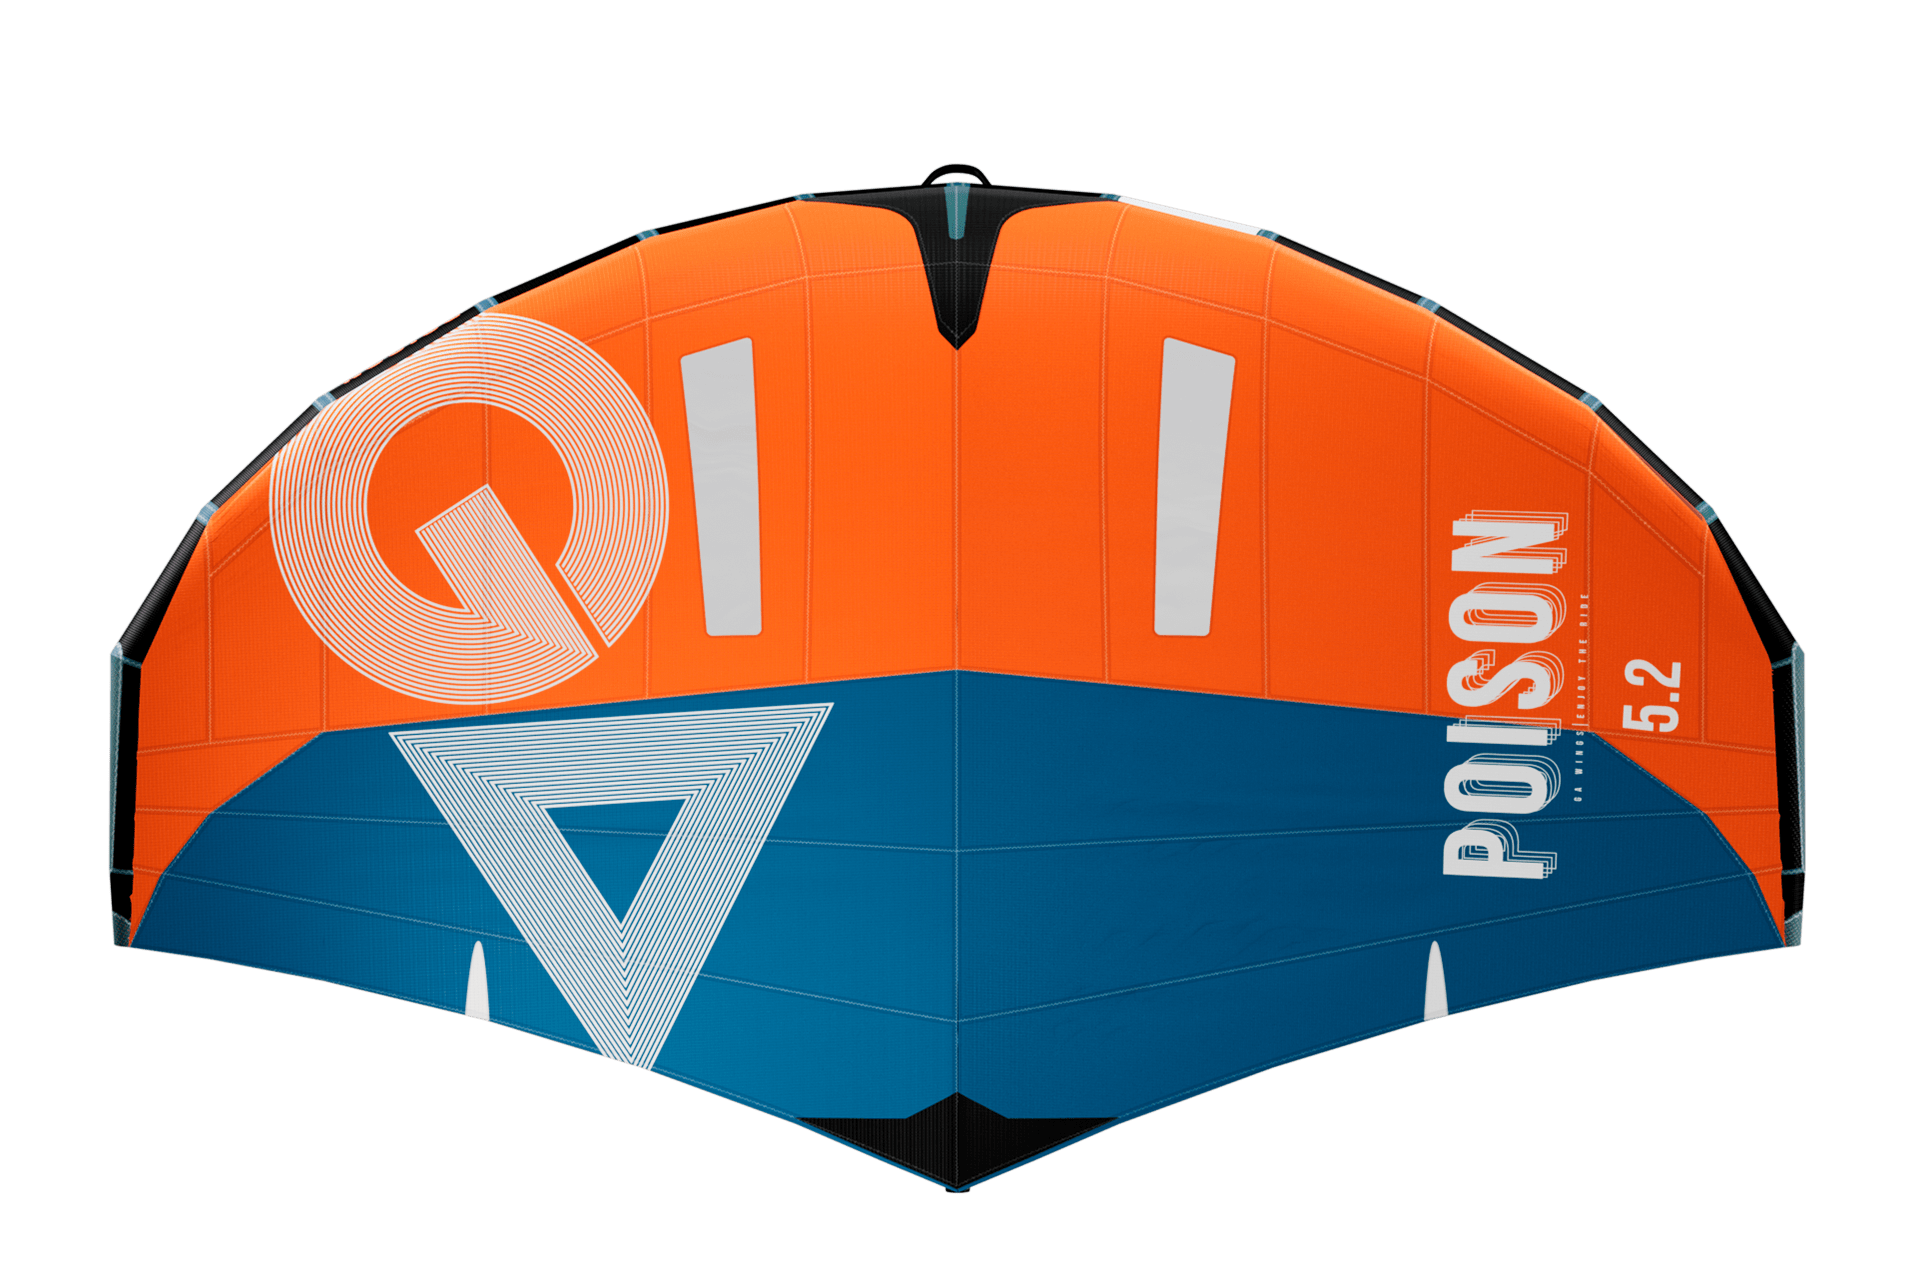 GA wings, wingfoil, Poison 2023, Gaastra wing, wingfoiling, wing Orange